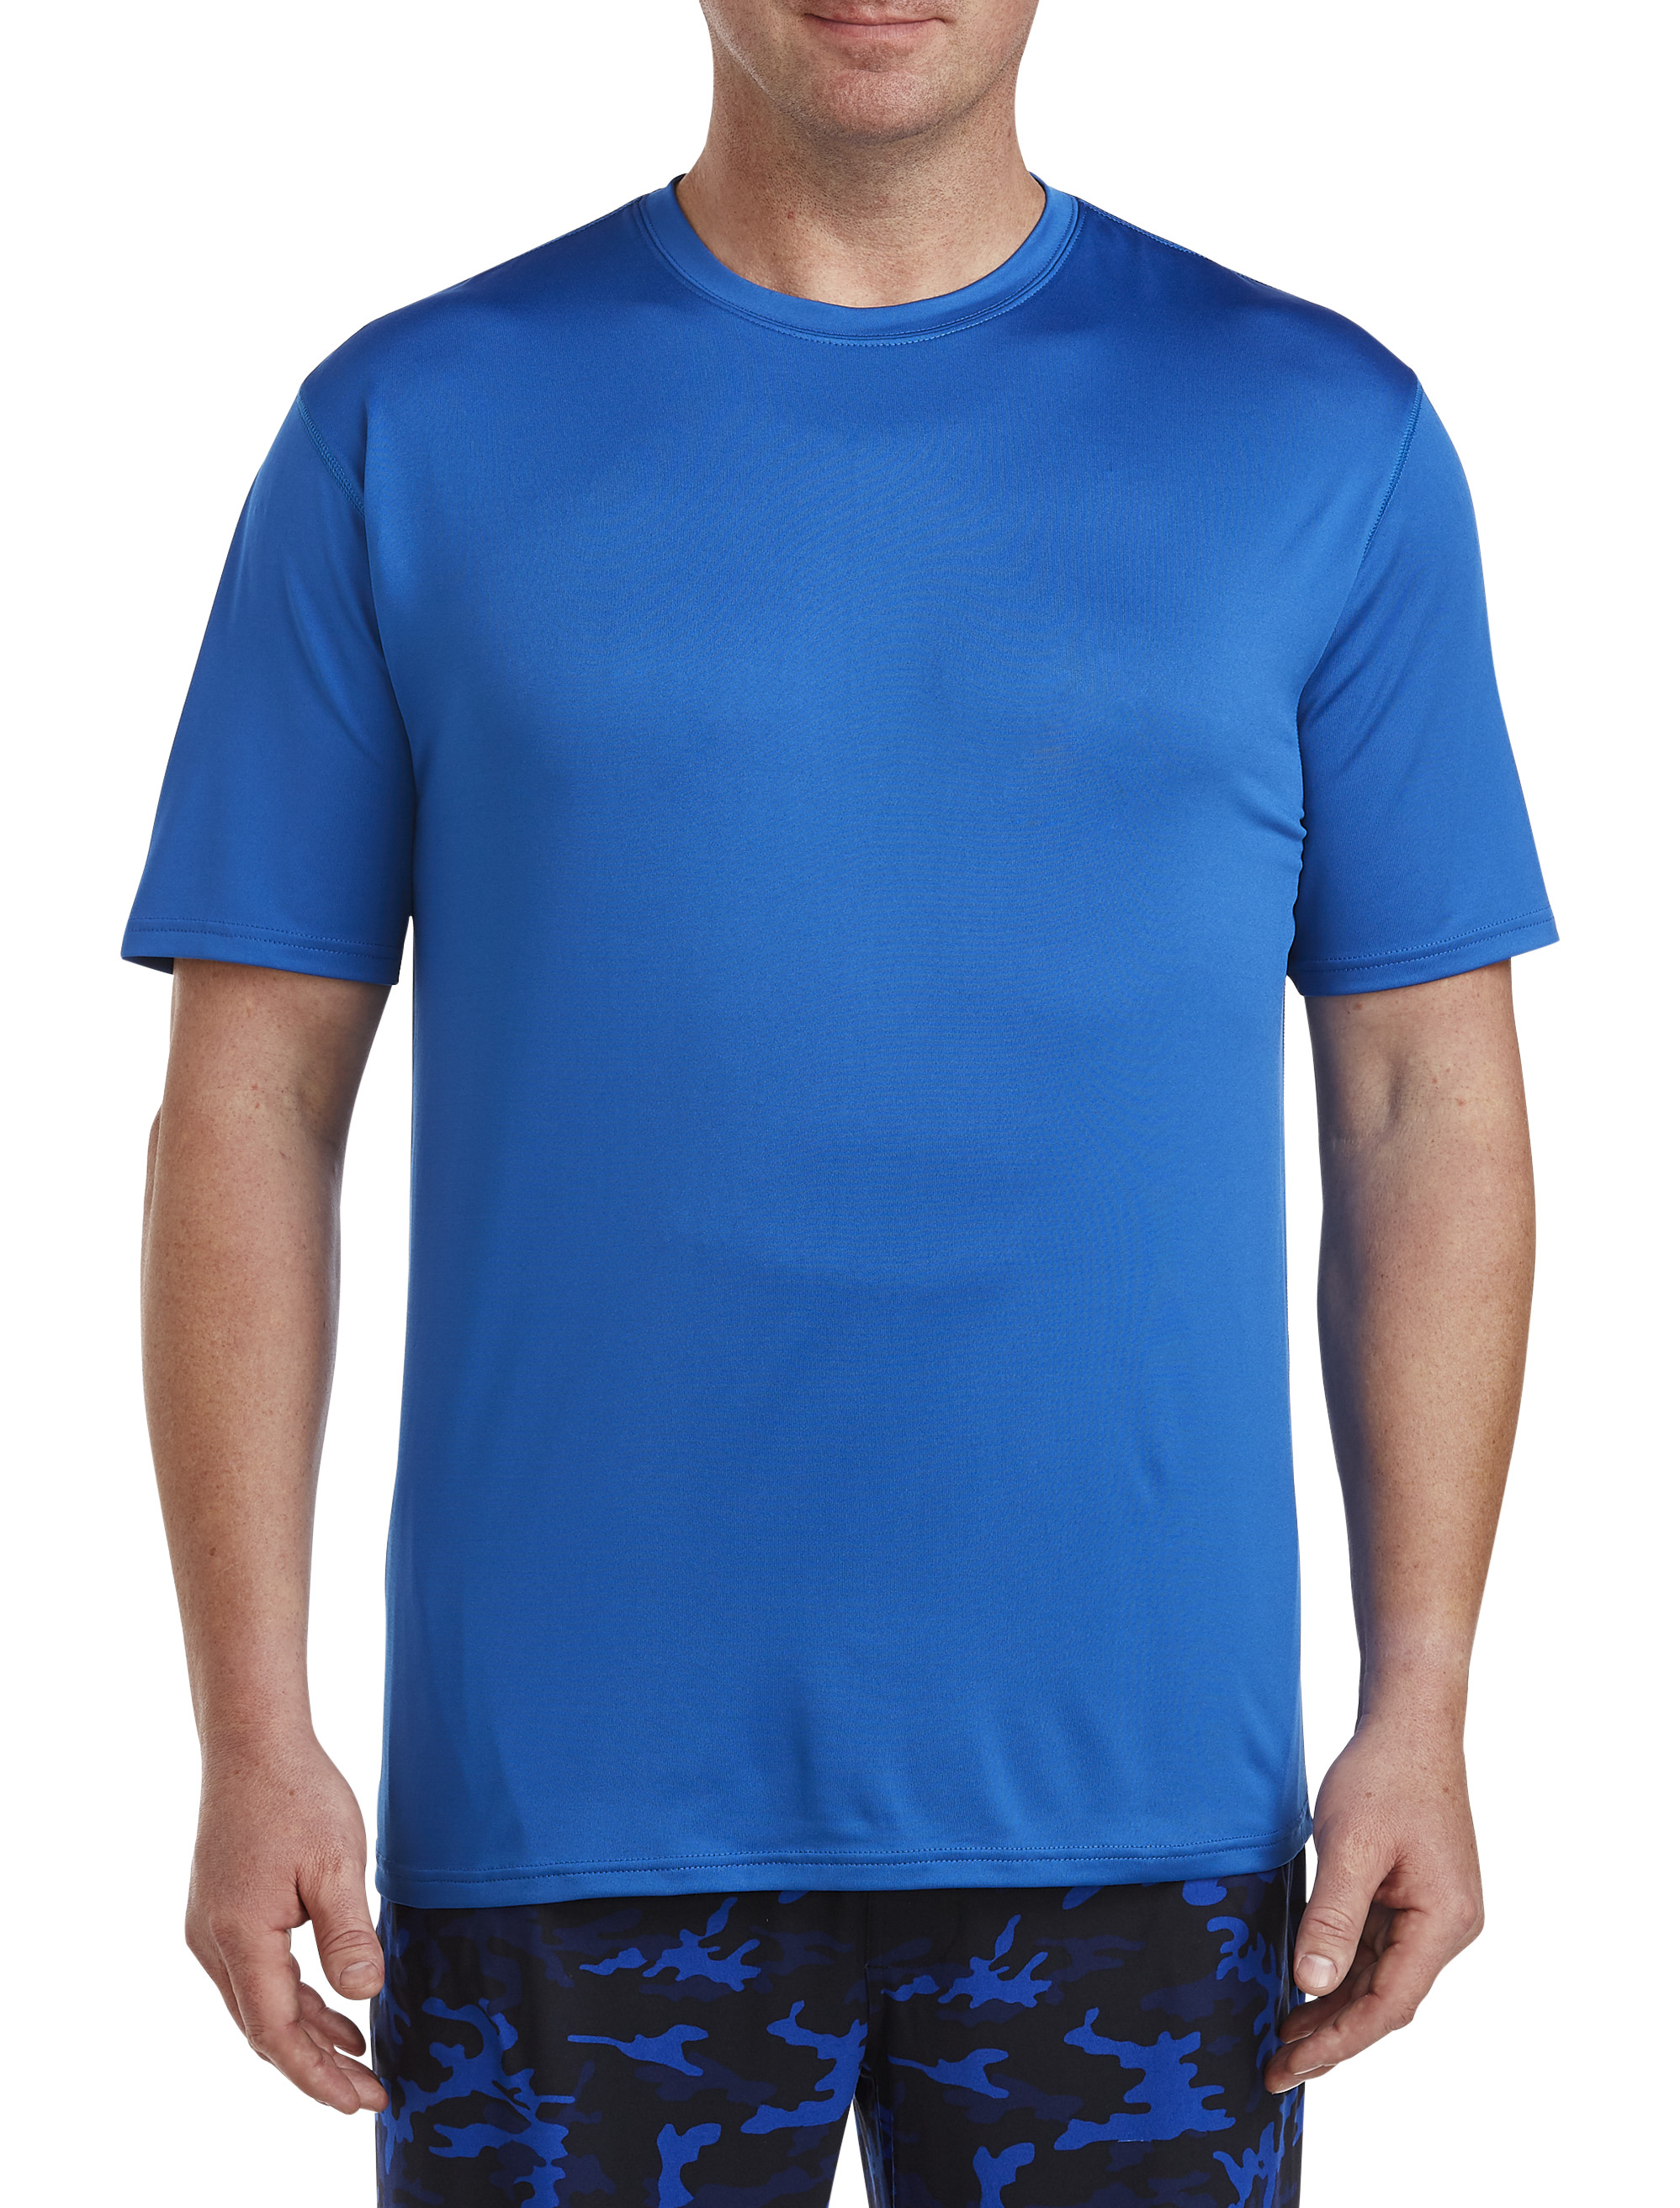 Harbor Bay by DXL Big and Tall Shapewear Crewneck T-Shirt (1XL, Black) at   Men's Clothing store